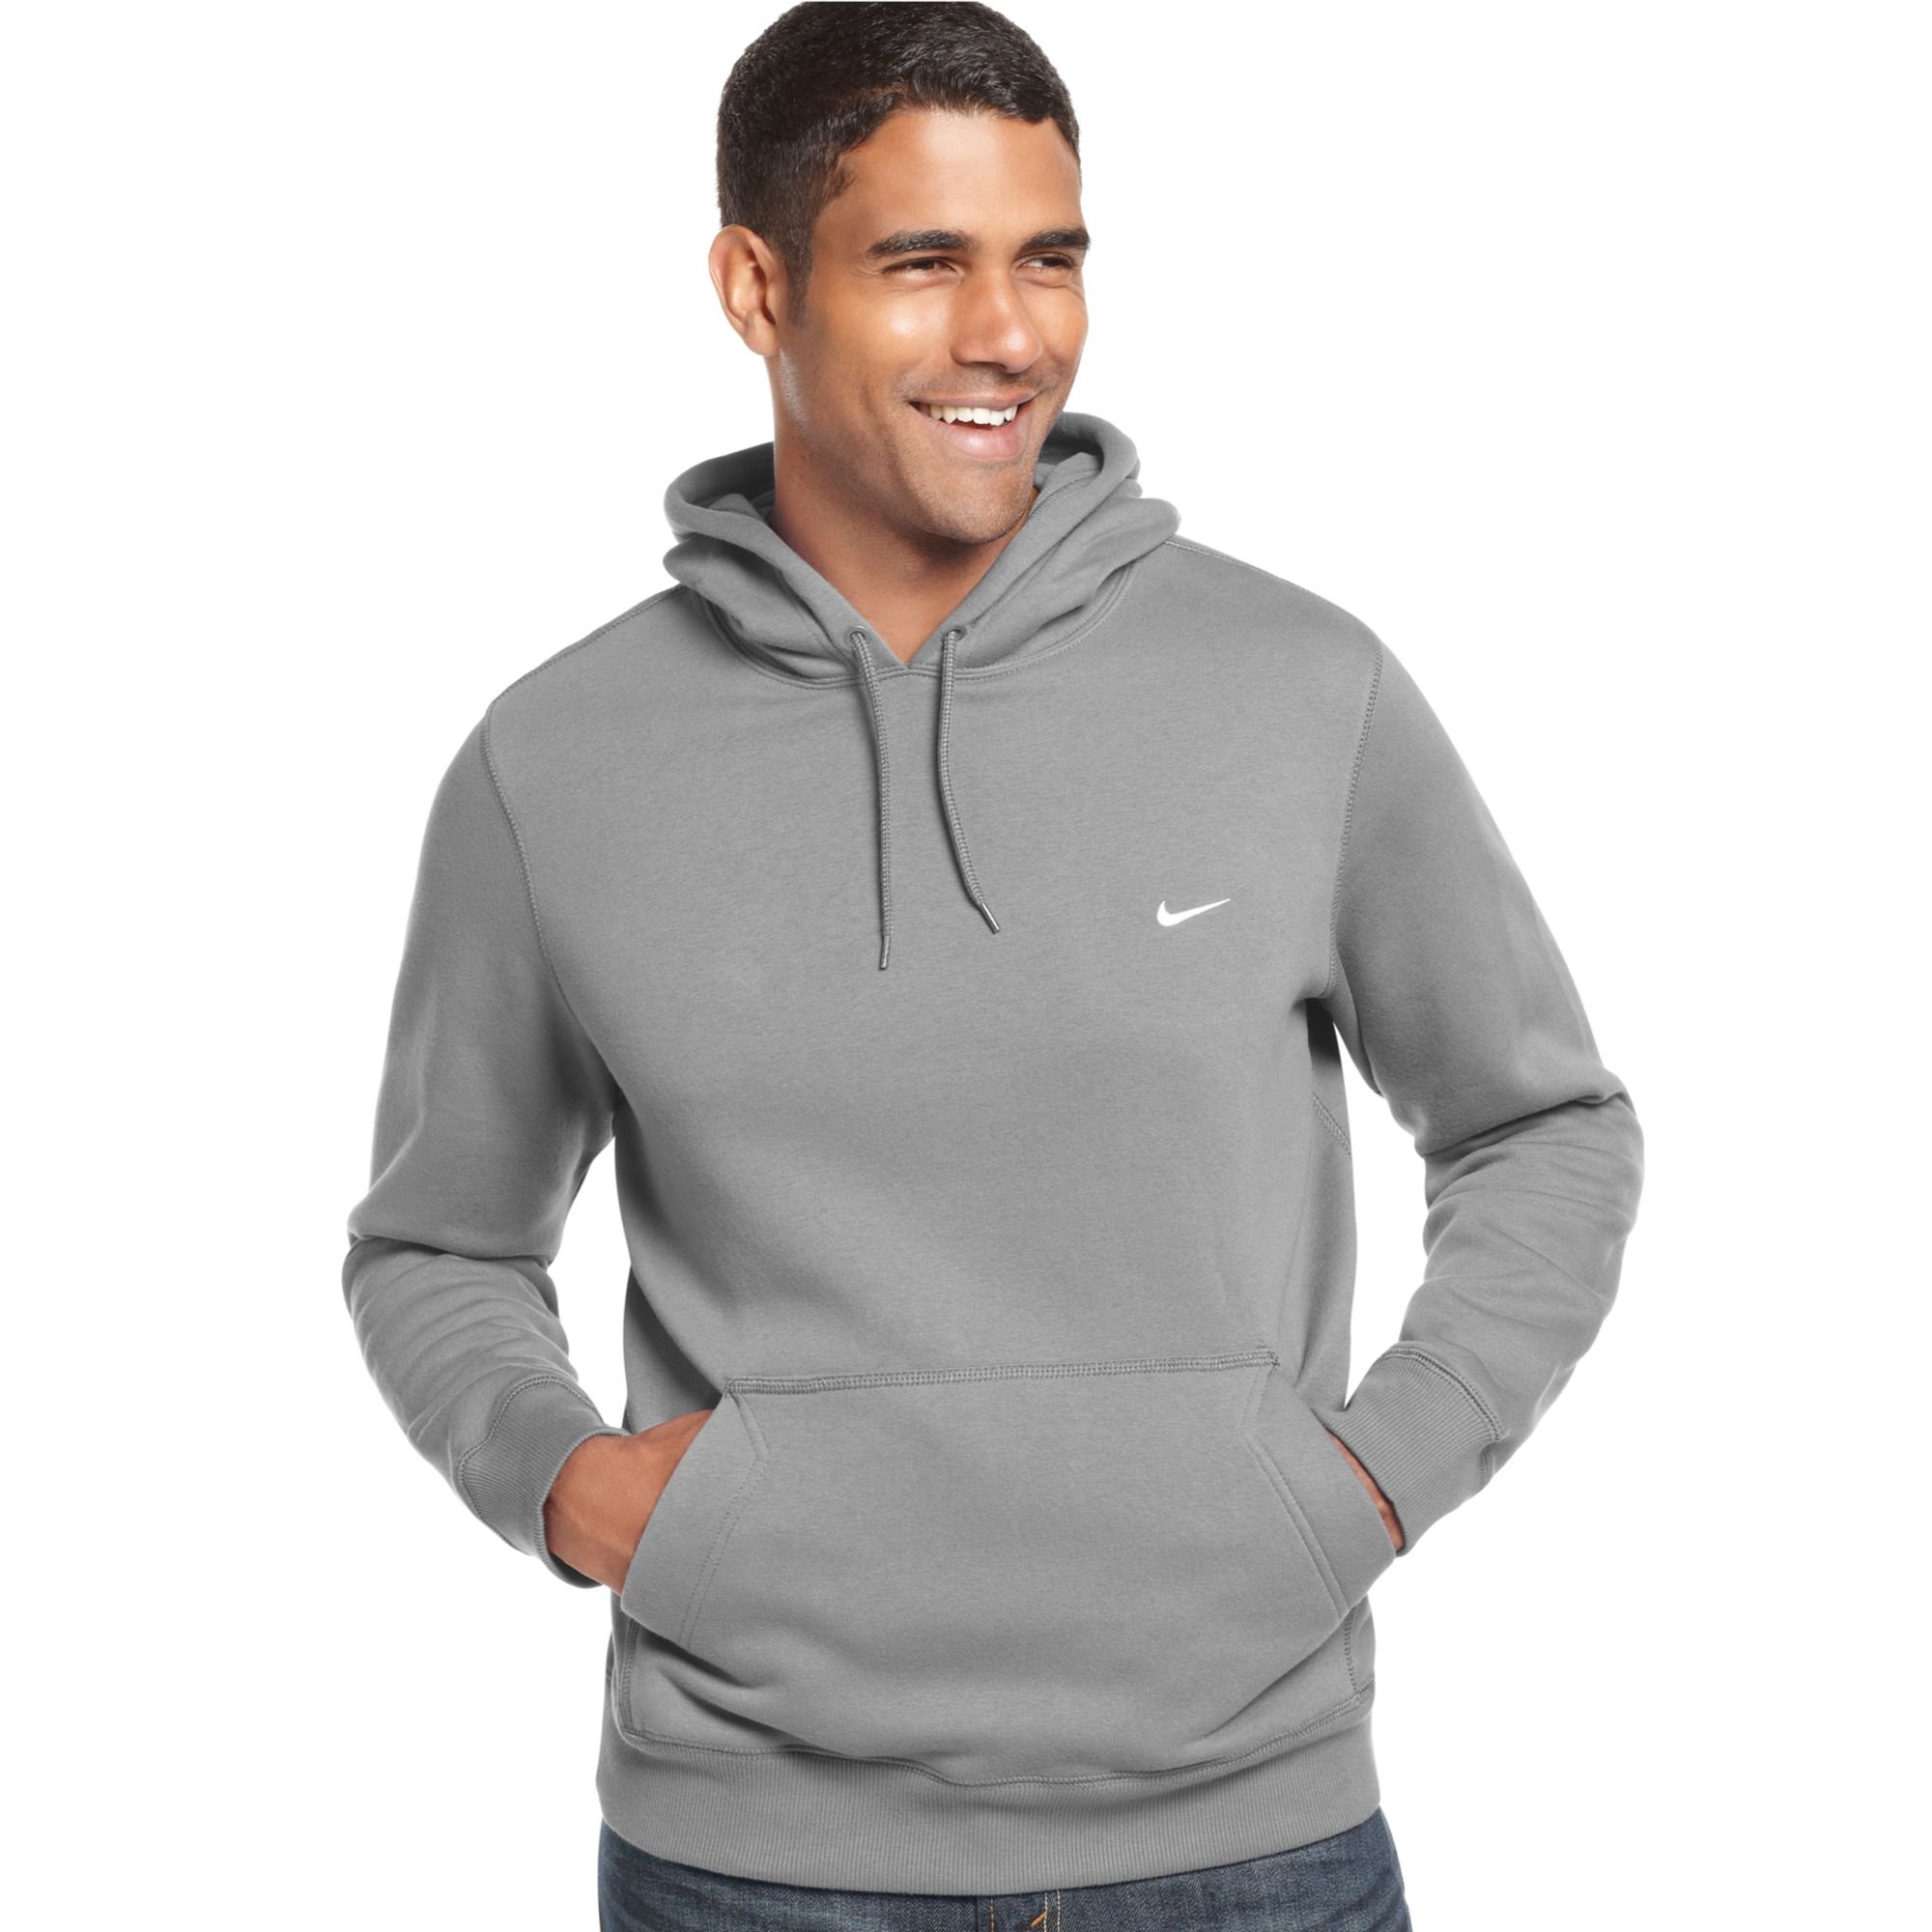 Nike Hoodie Mens Grey - Cashmere Sweater England